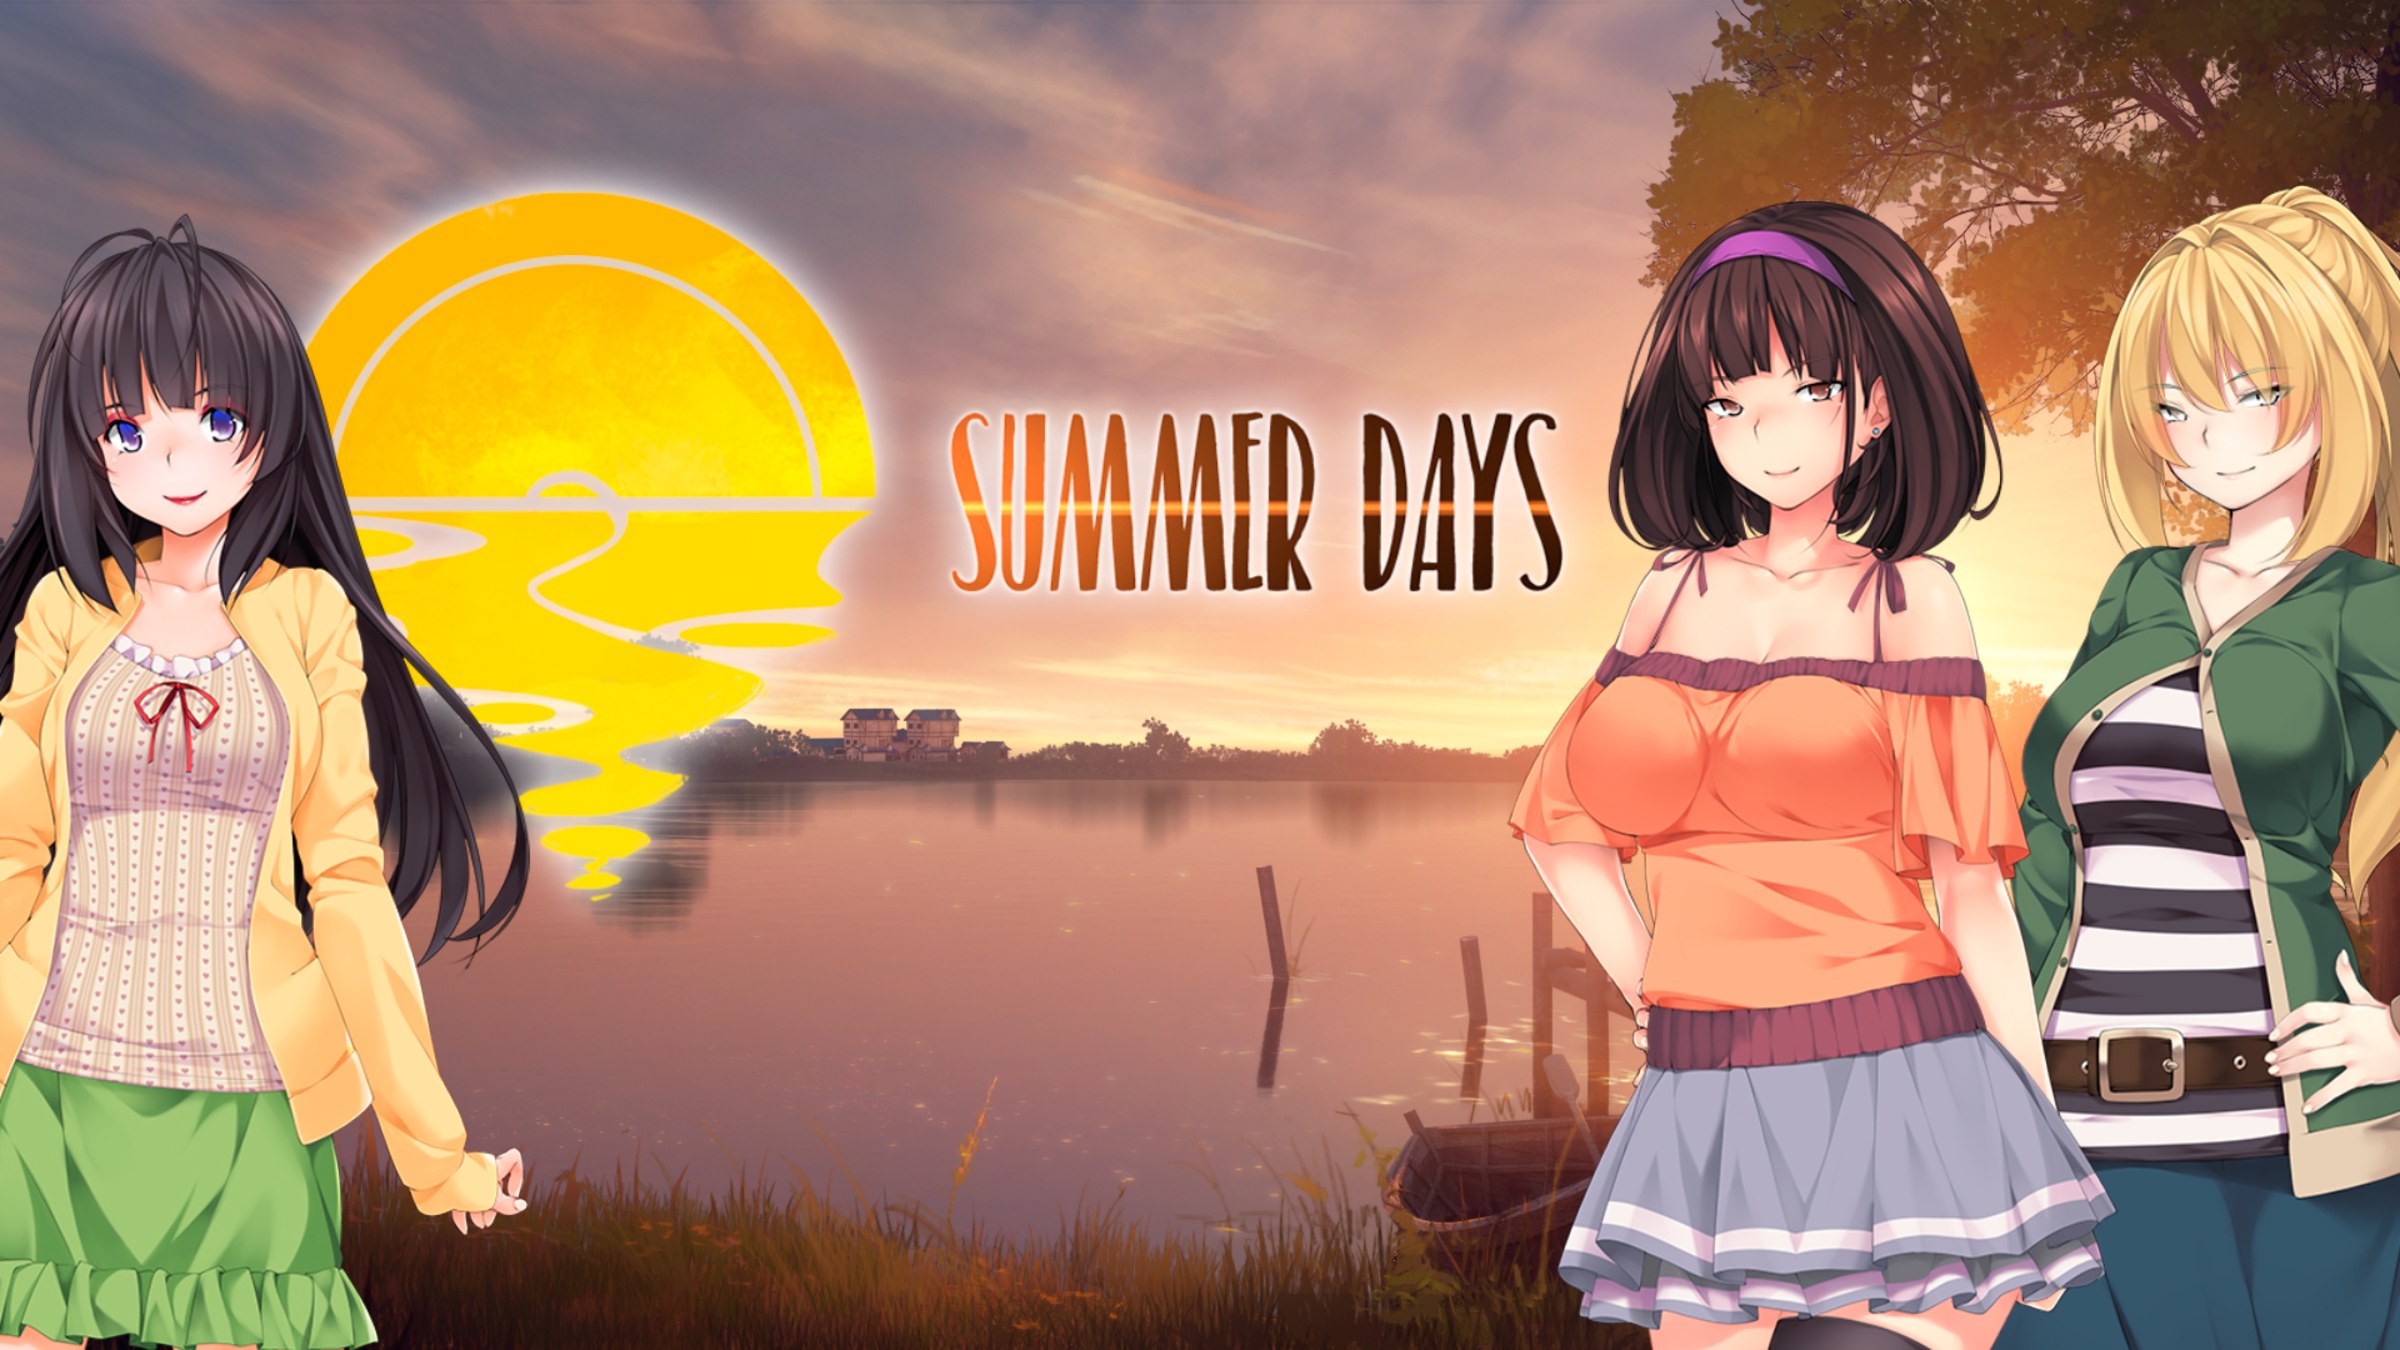 Summer days visual novel